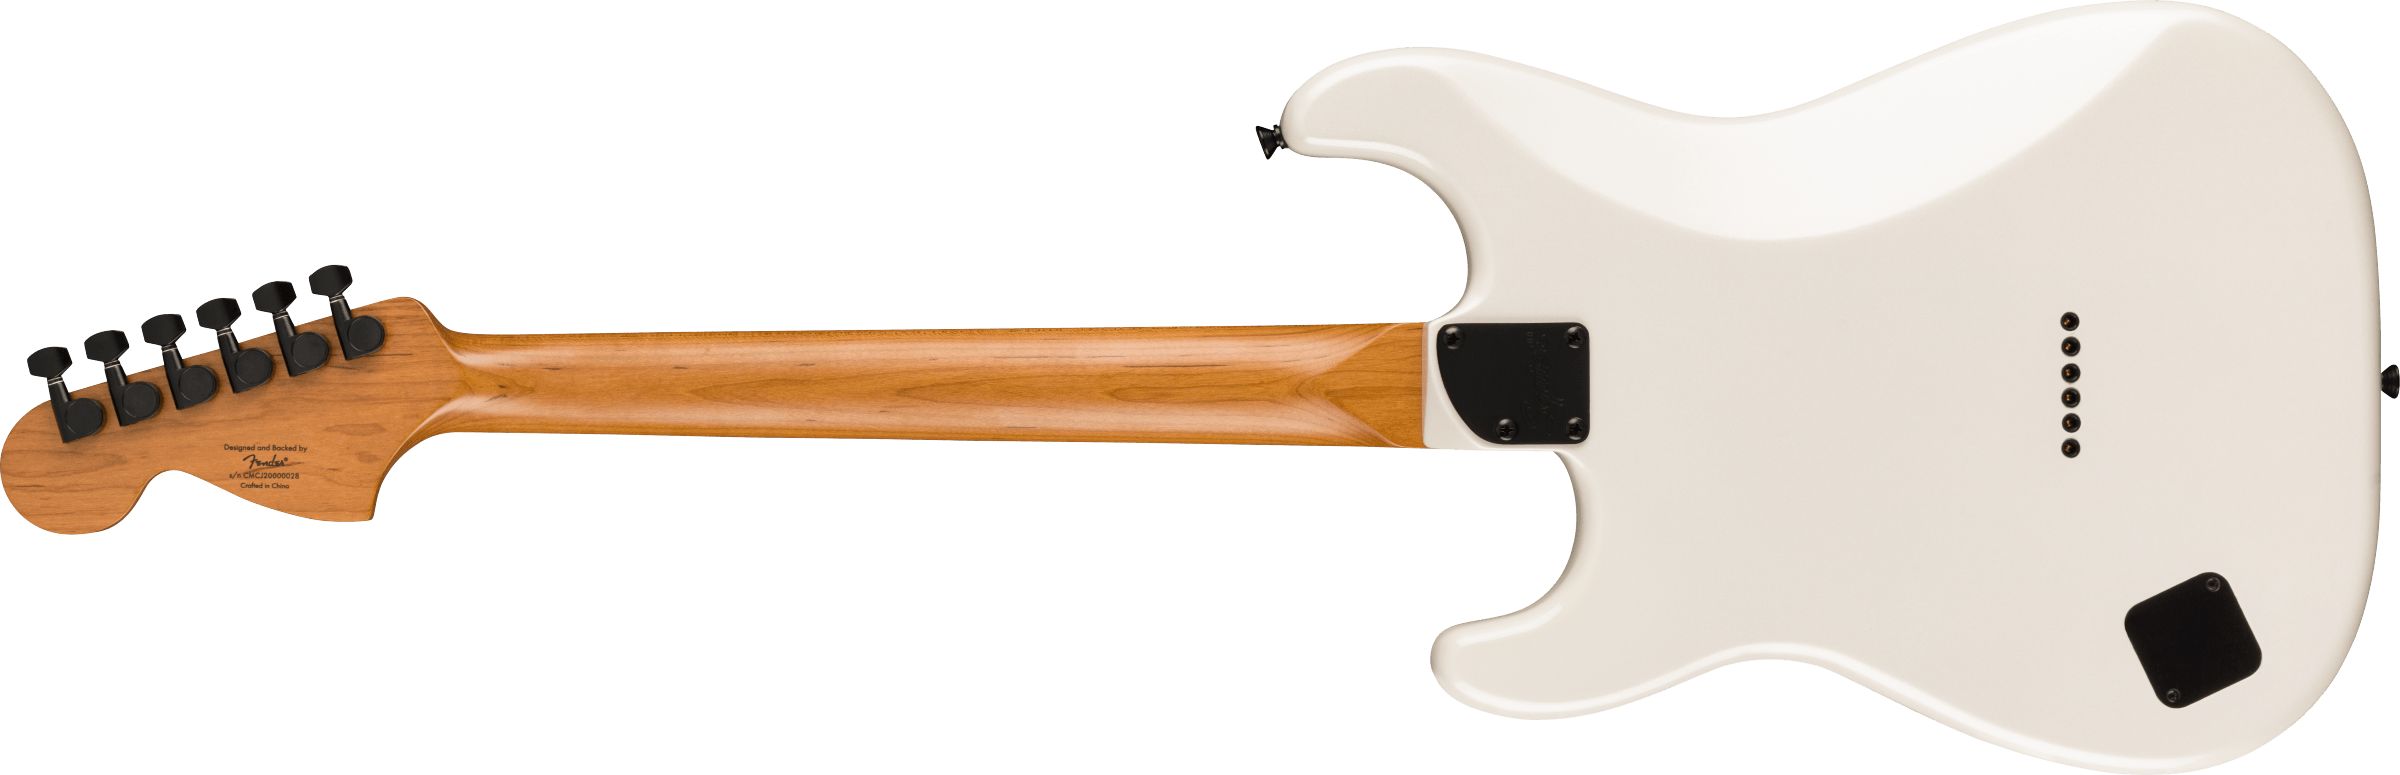 Squier contemp special. Squier Contemporary Stratocaster Special HT. Squier Contemporary Telecaster rh Pearl White. Фендер скваер, Контемпорари телекастер. Squier Contemp tele белый.